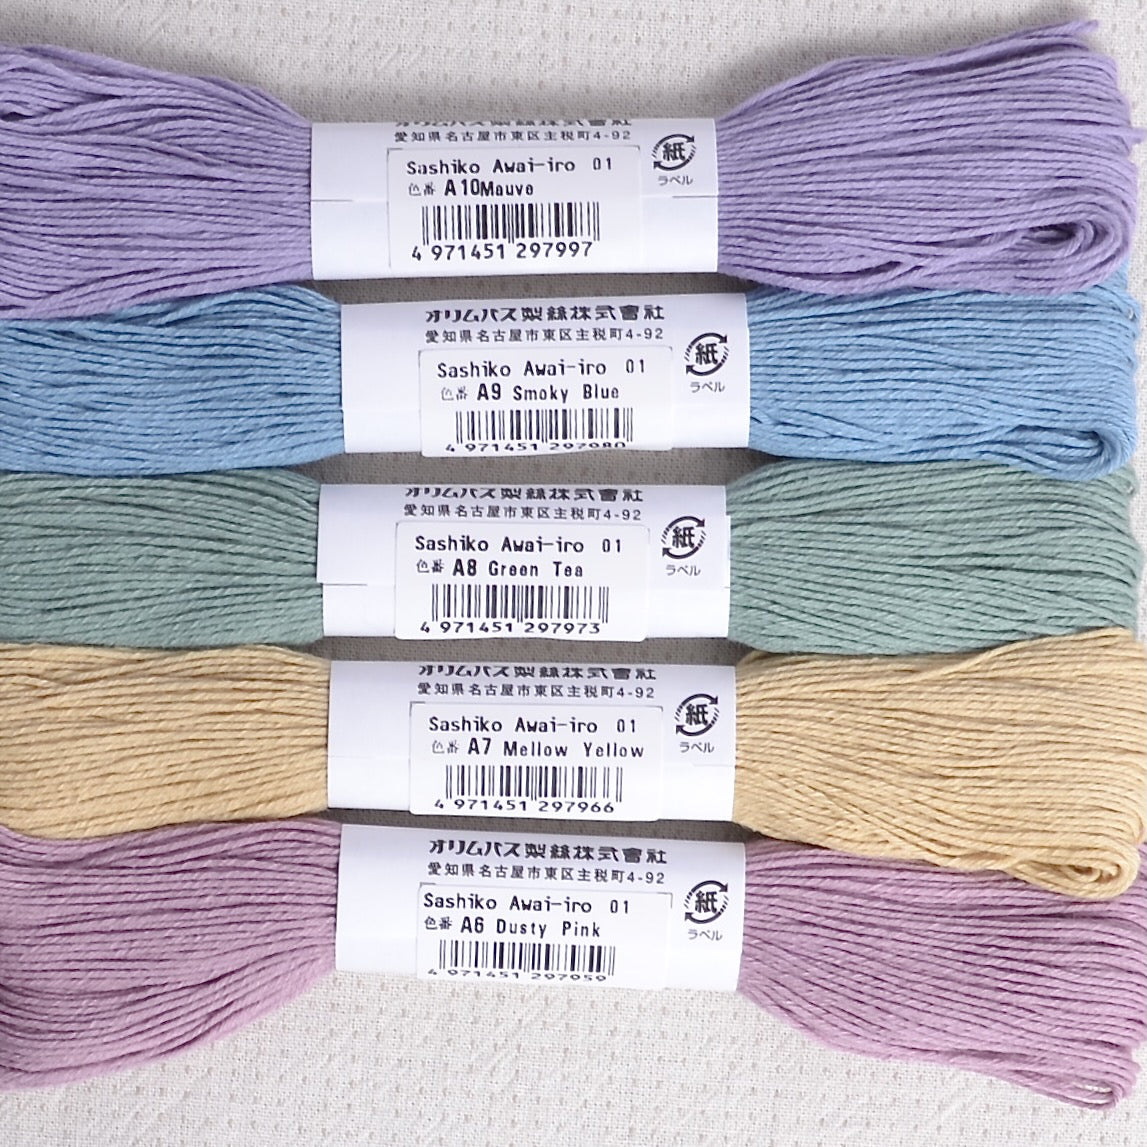 Olympus awai-iro smokey tone sashiko threads  showing colour numbers